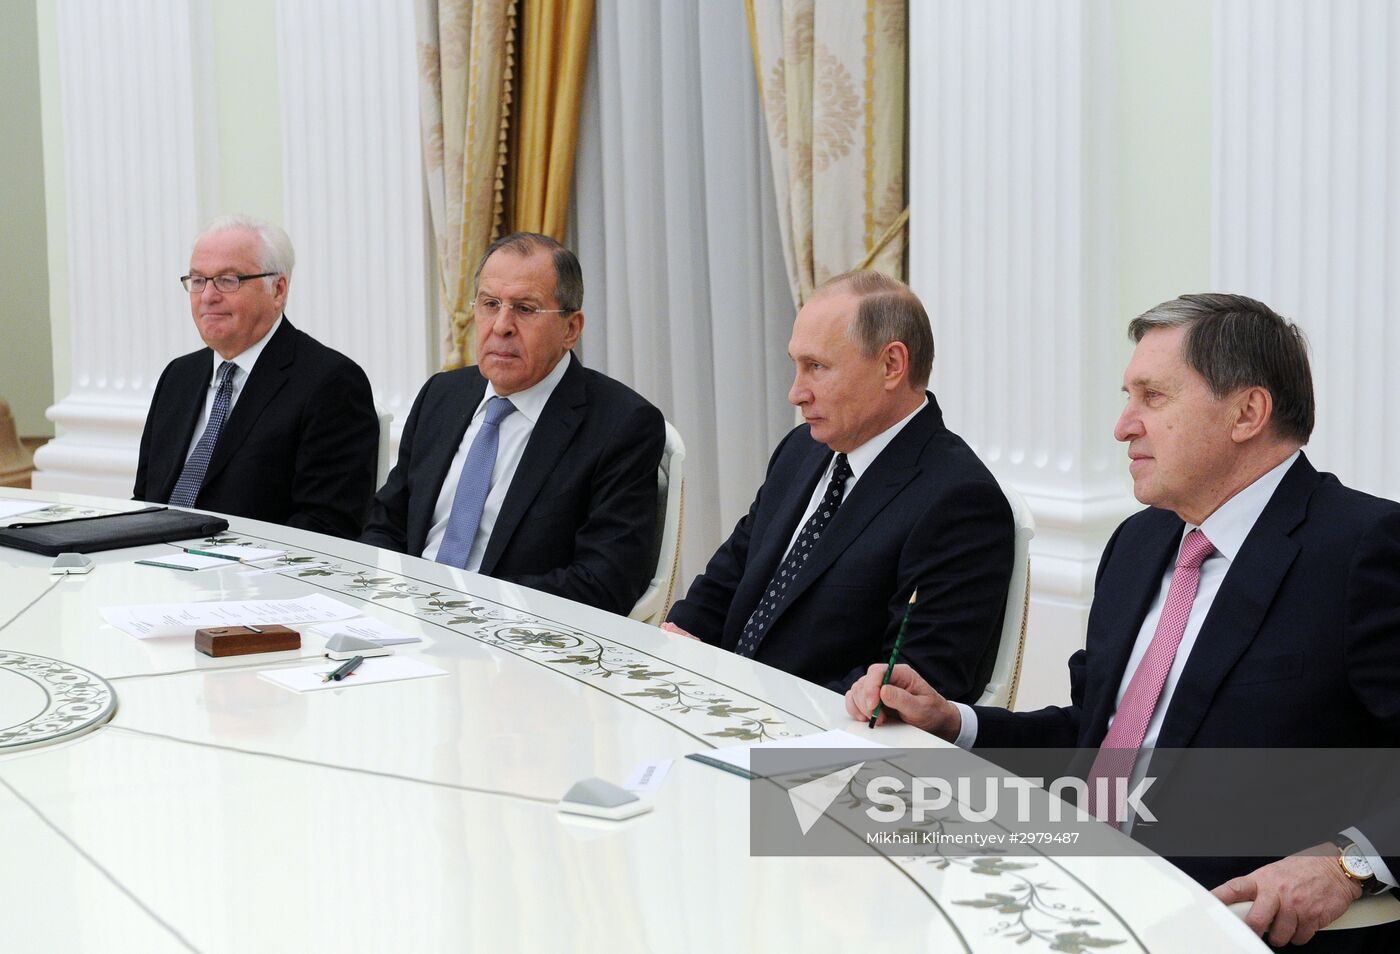 Russian President Vladimir Putin met witn newly elect UN secretary general Attonio Guterres